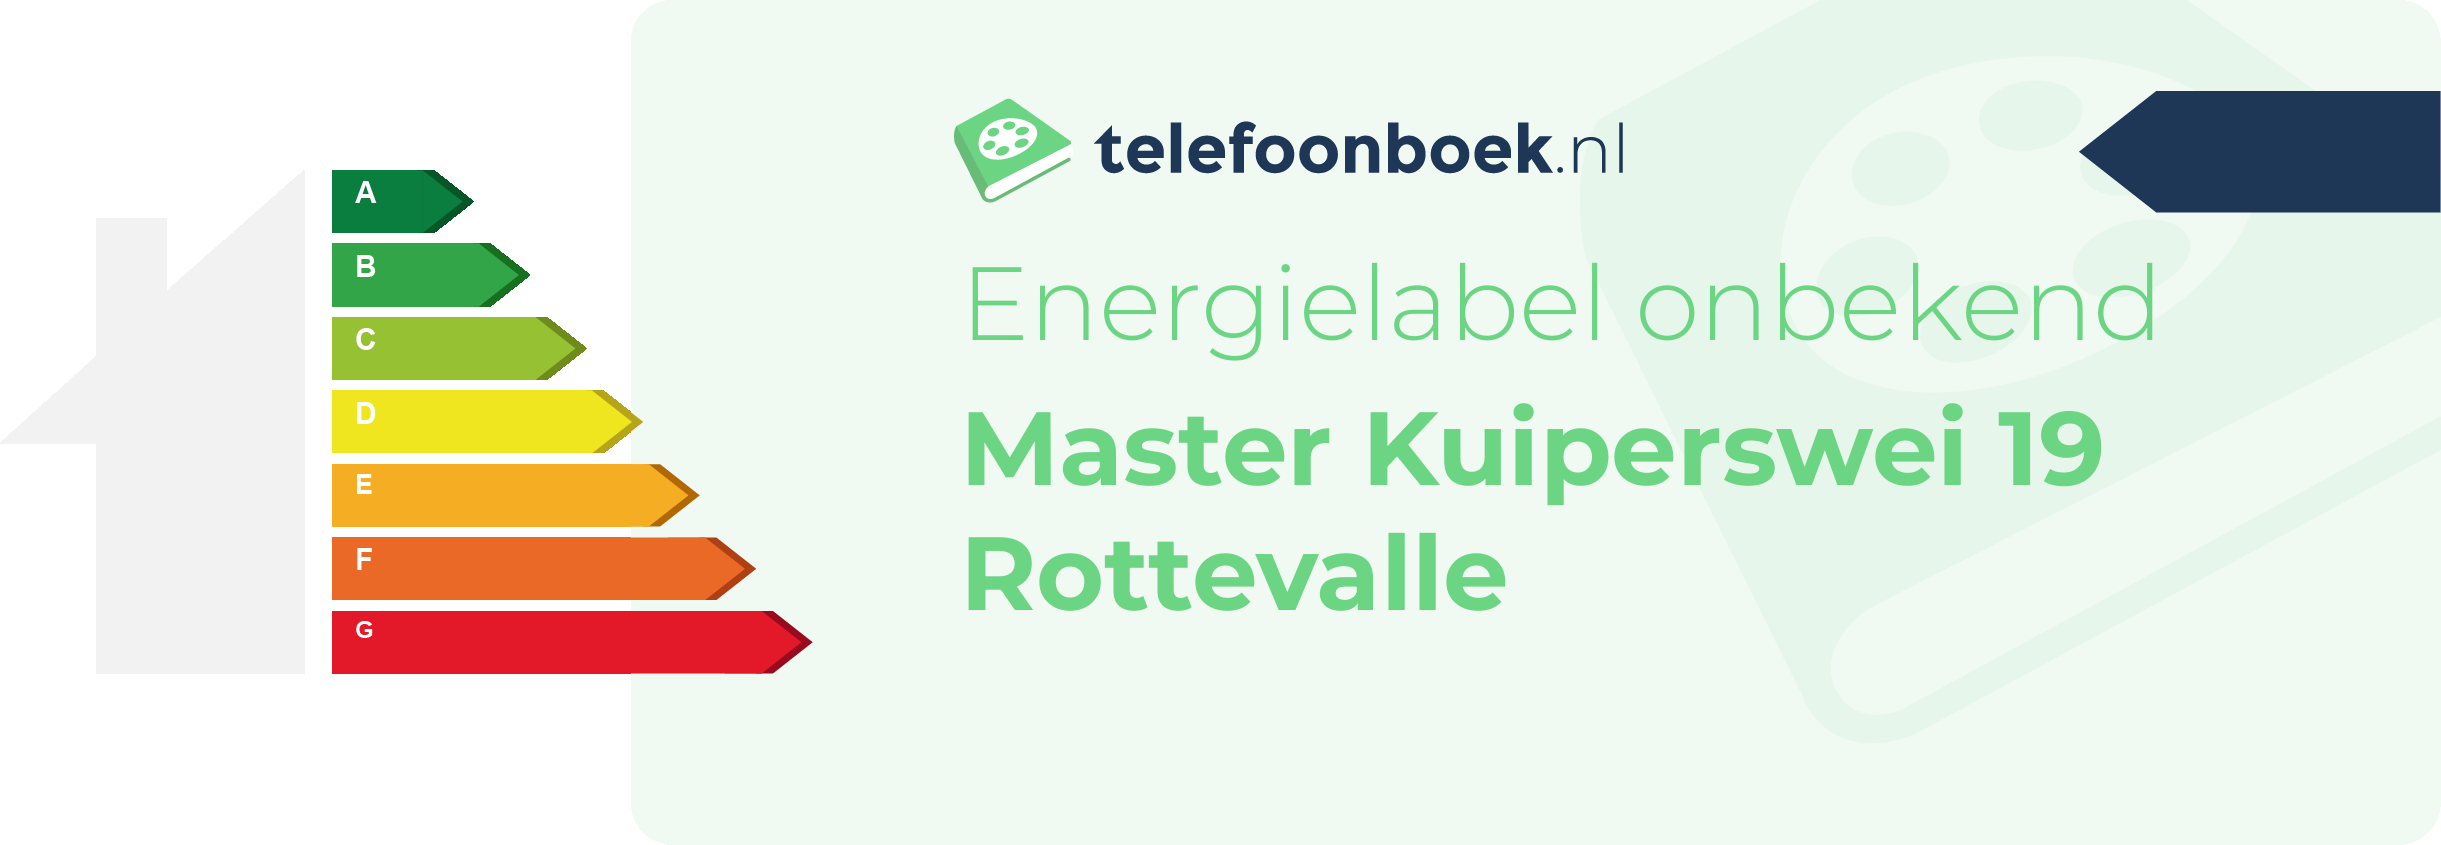 Energielabel Master Kuiperswei 19 Rottevalle